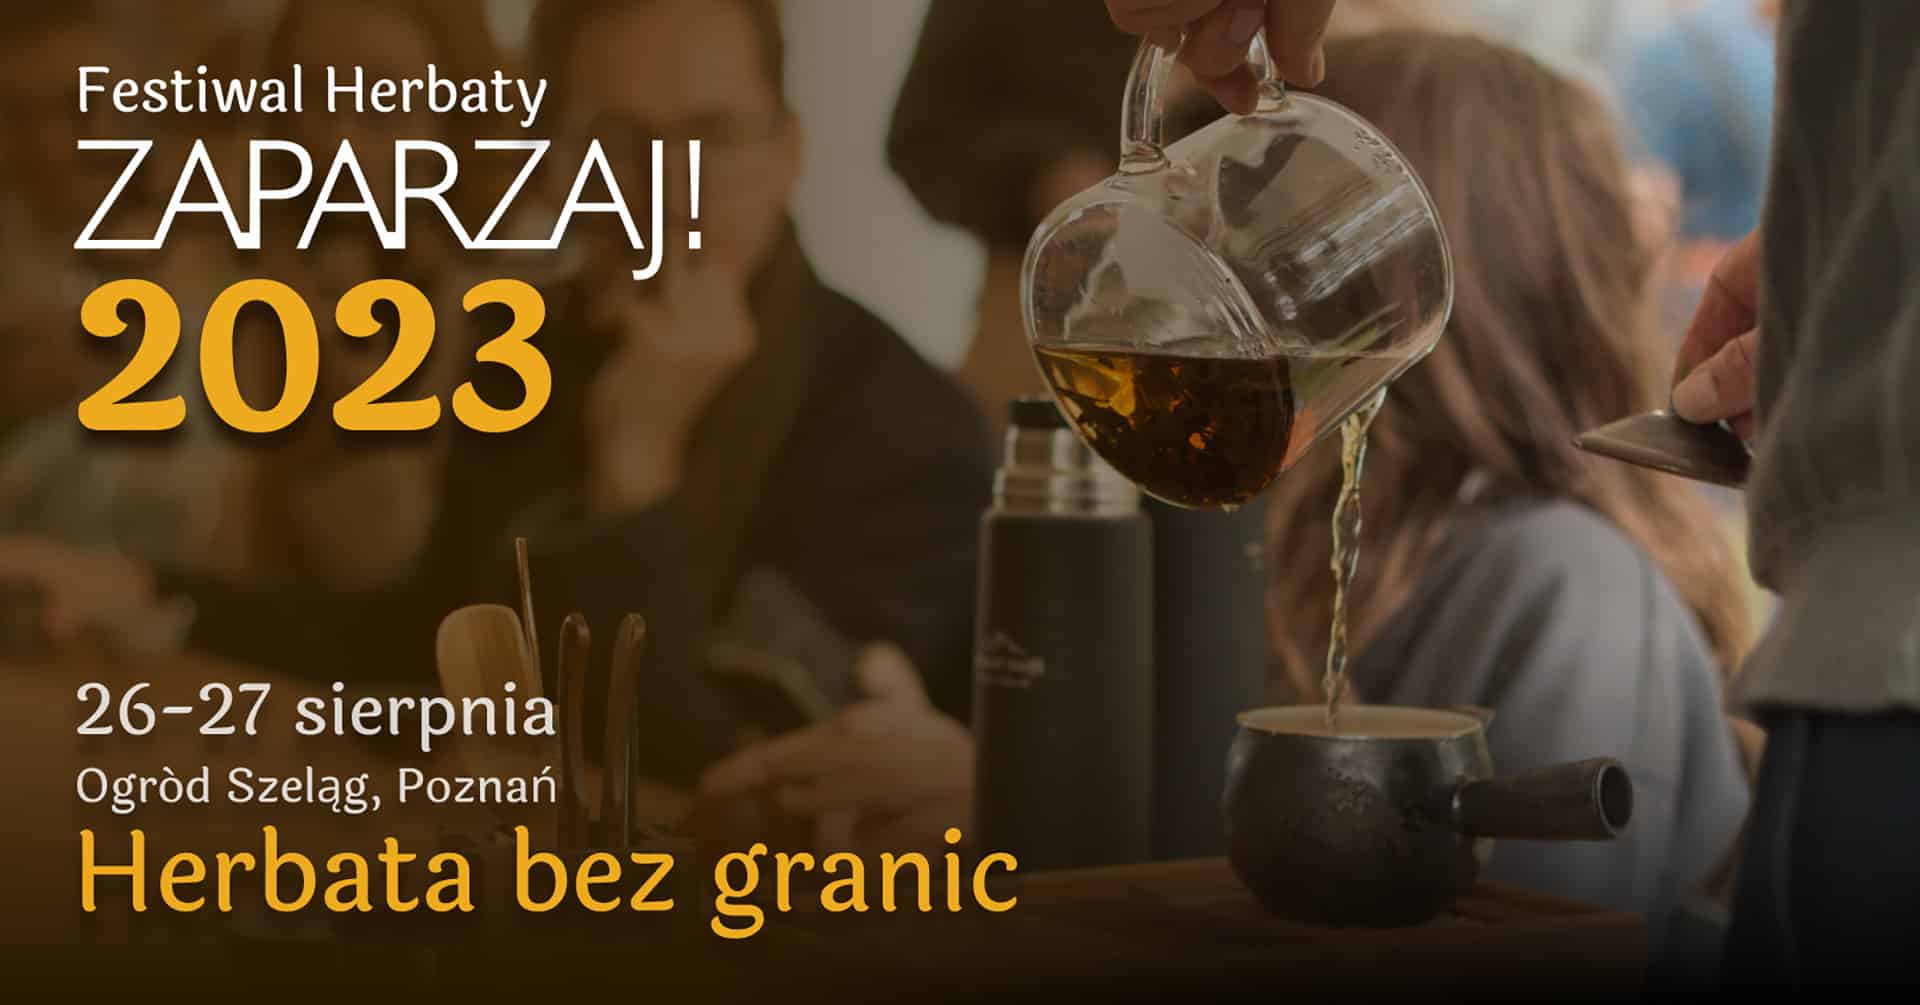 Festiwal Herbaty Zaparzaj 2023 // Zaparzaj 2023 Tea Festival